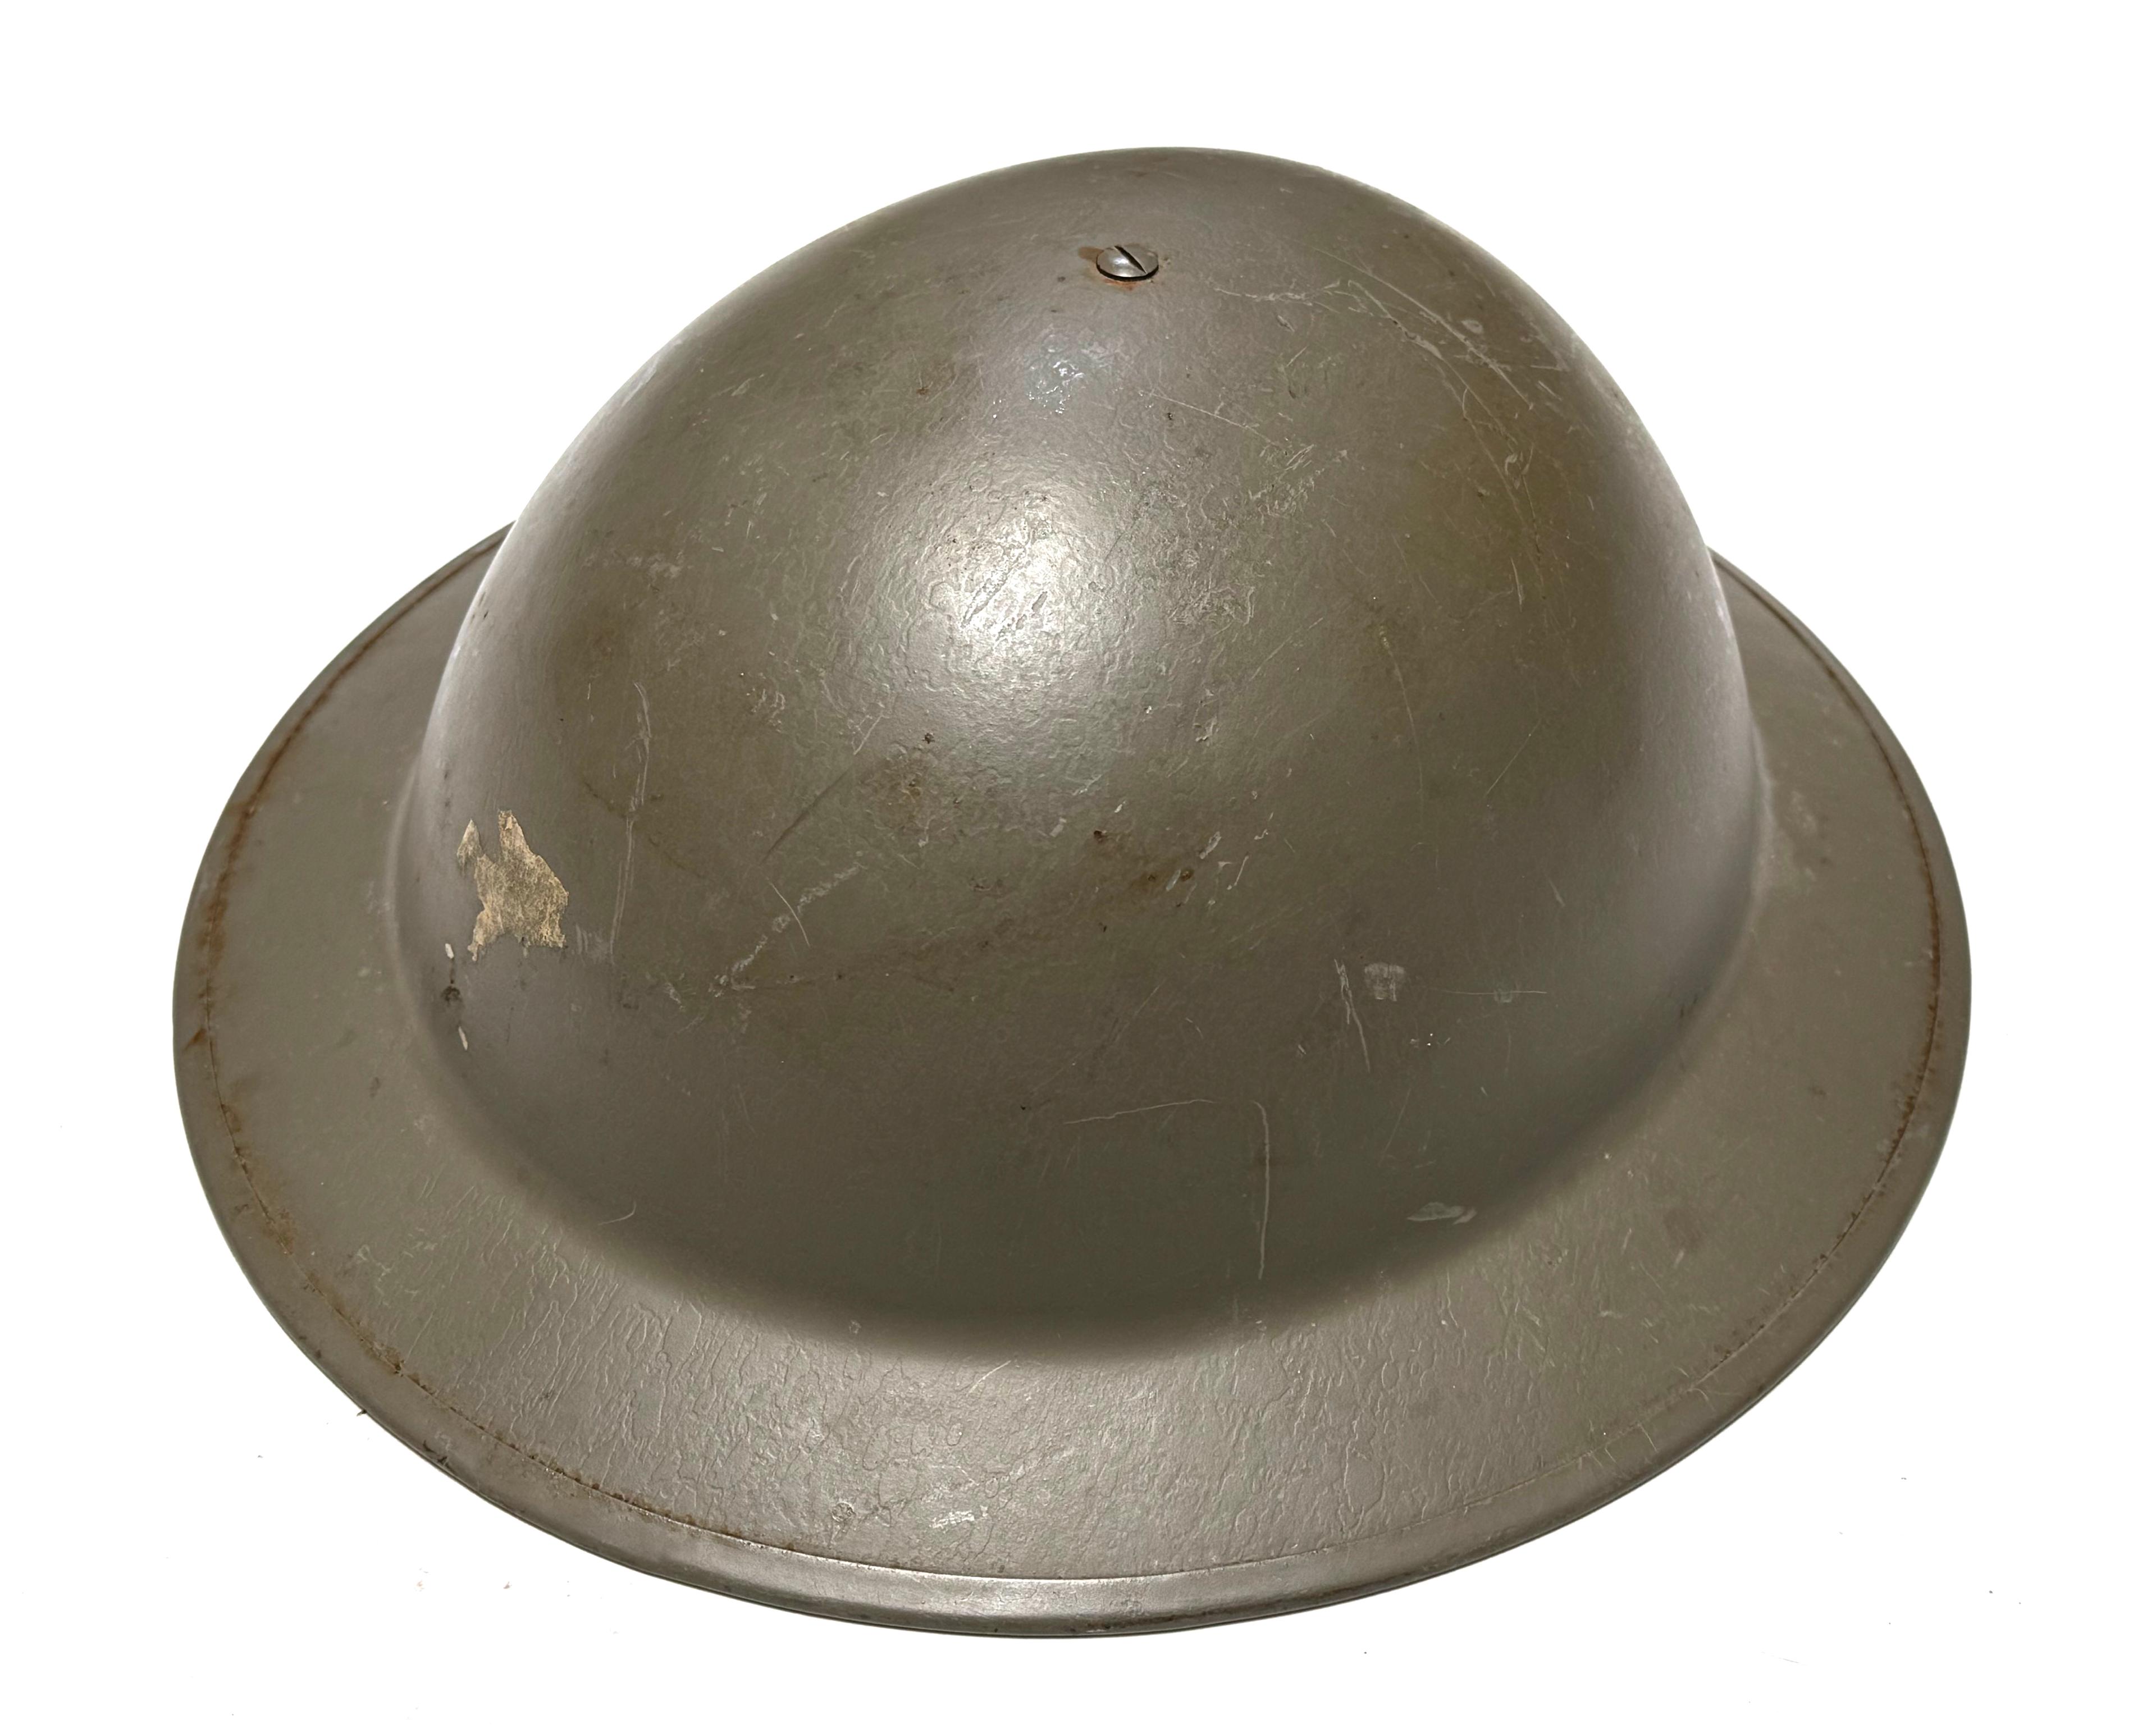 1956 Dutch Civil Defense Mk II Doughboy Clone Helmet